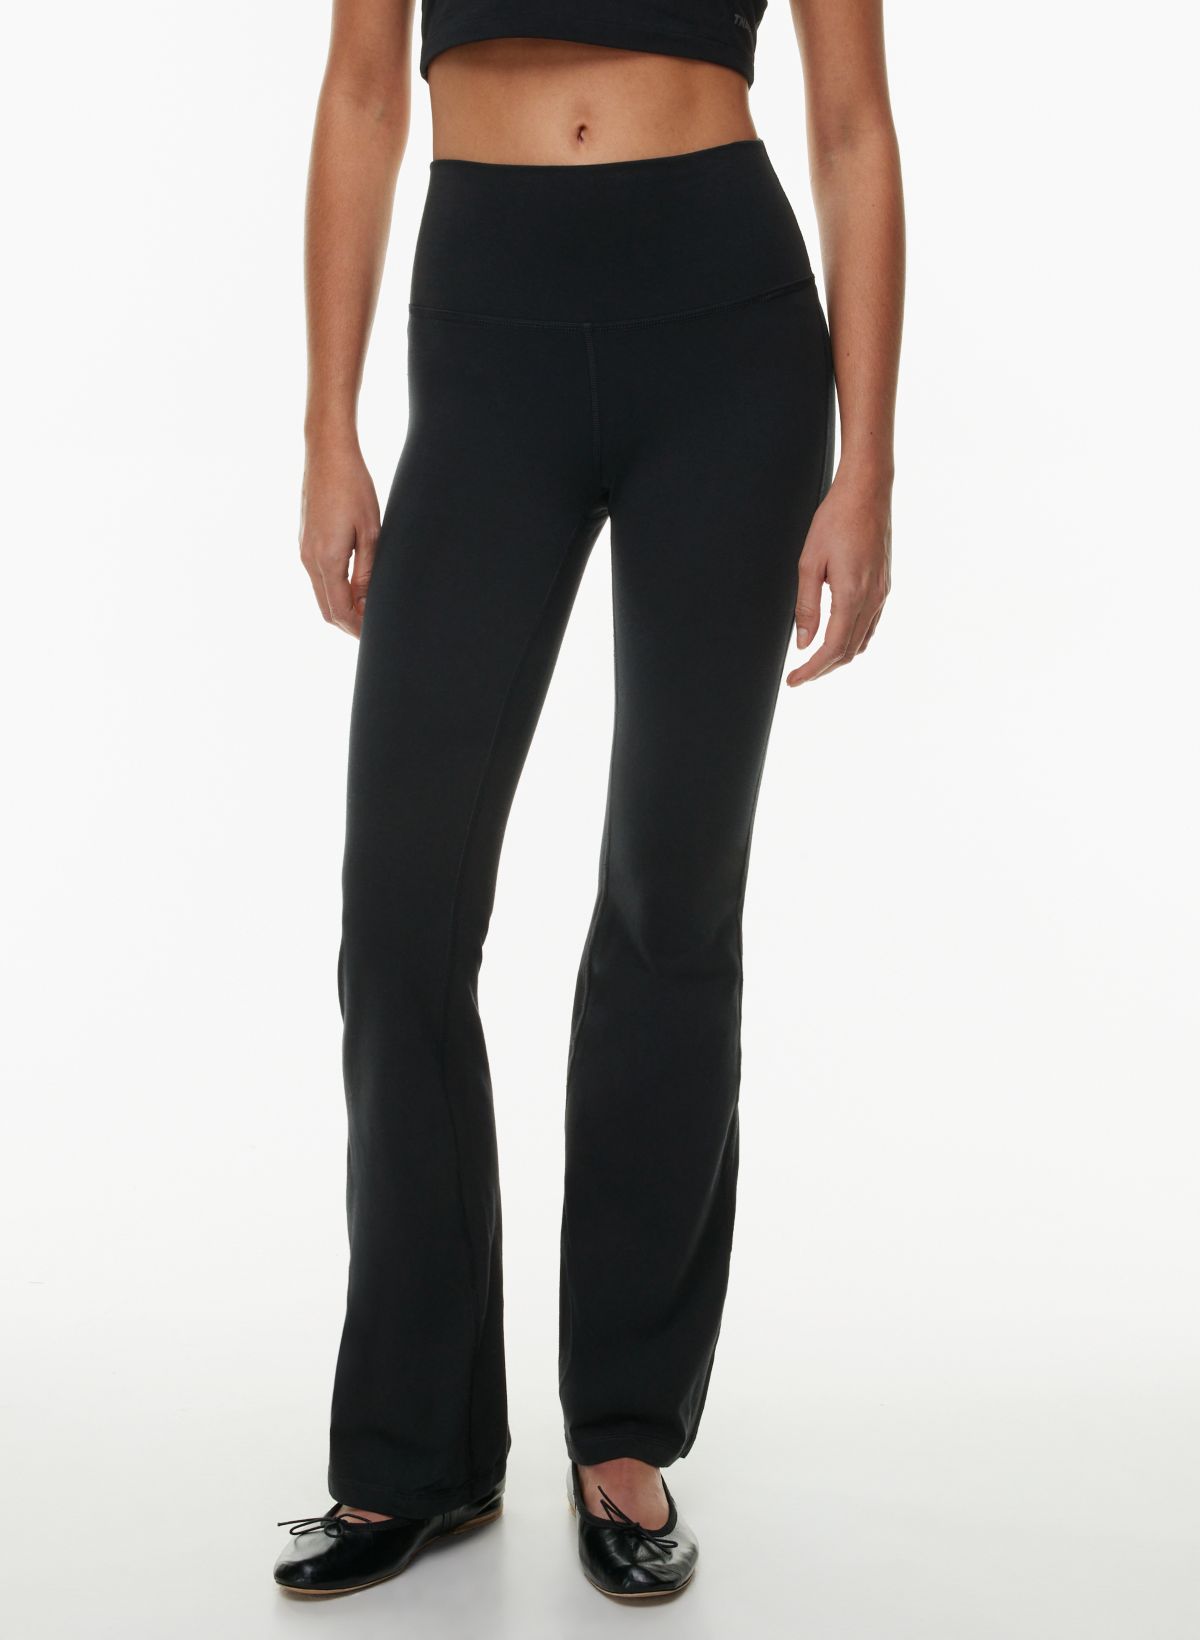 Buy Topshop women petite elastic high waist legging black Online